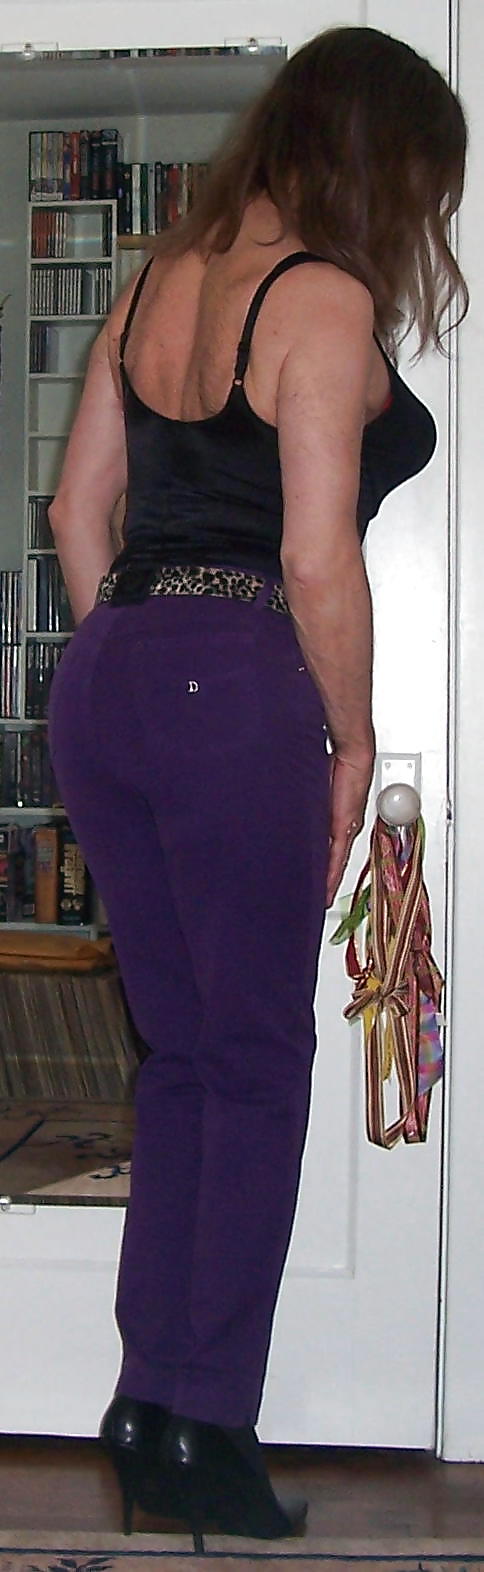 Crossdressing - Mon Pantalon Violet #24731119